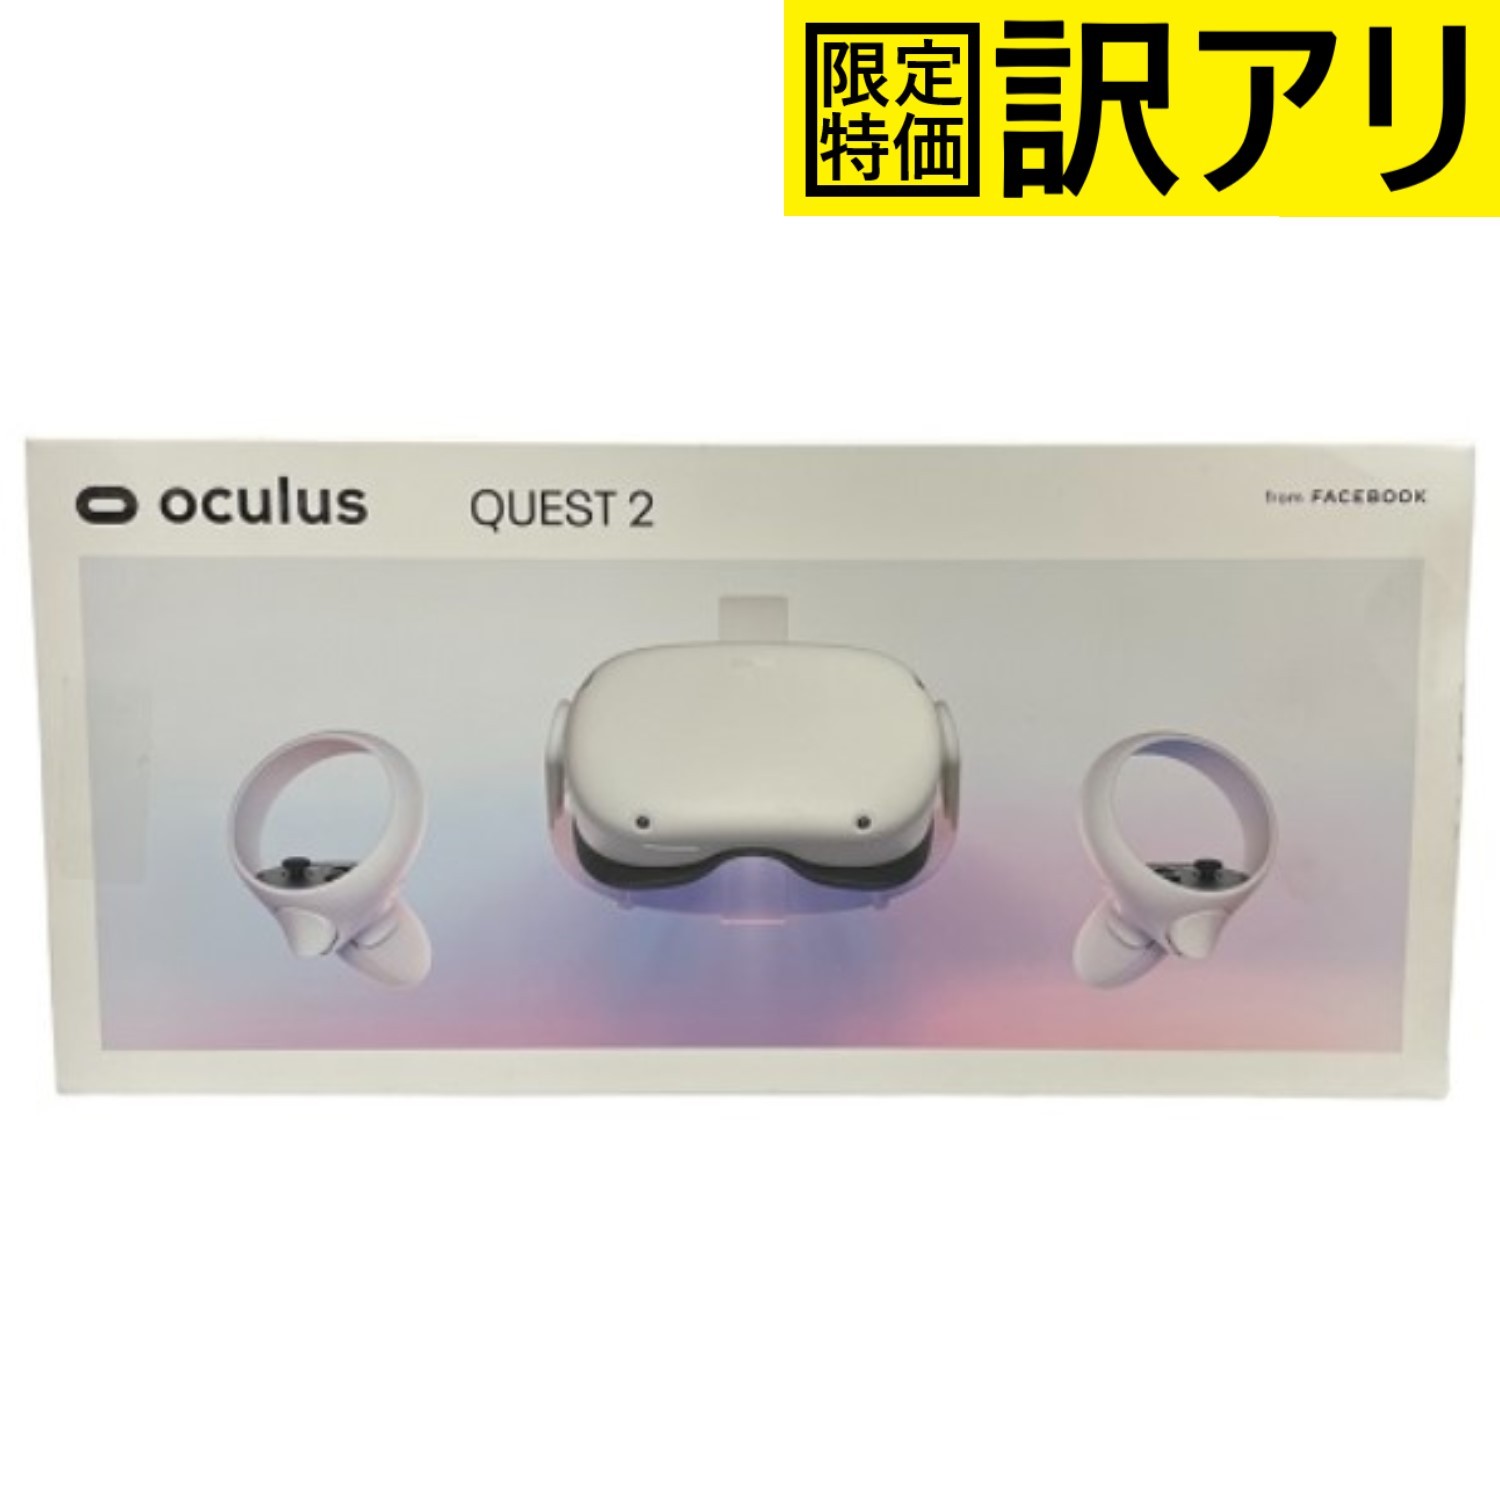  Meta Quest 2 (メタクエスト) 64GB 完全ワイヤレスオールインワンVRヘッドセット oculusquest2-64-24 